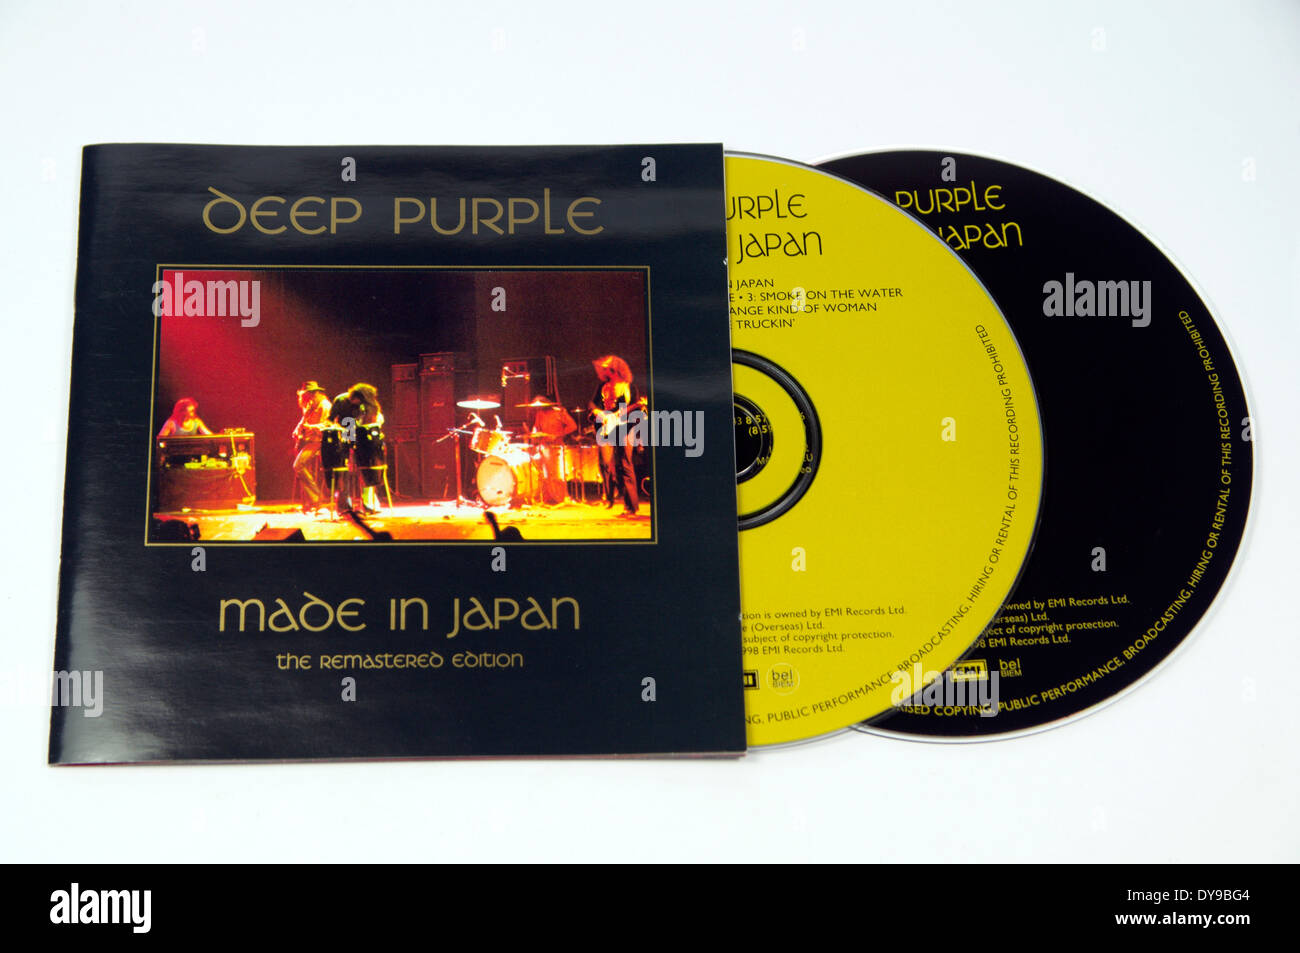 Deep Purple "made in Japan" Album Foto de stock